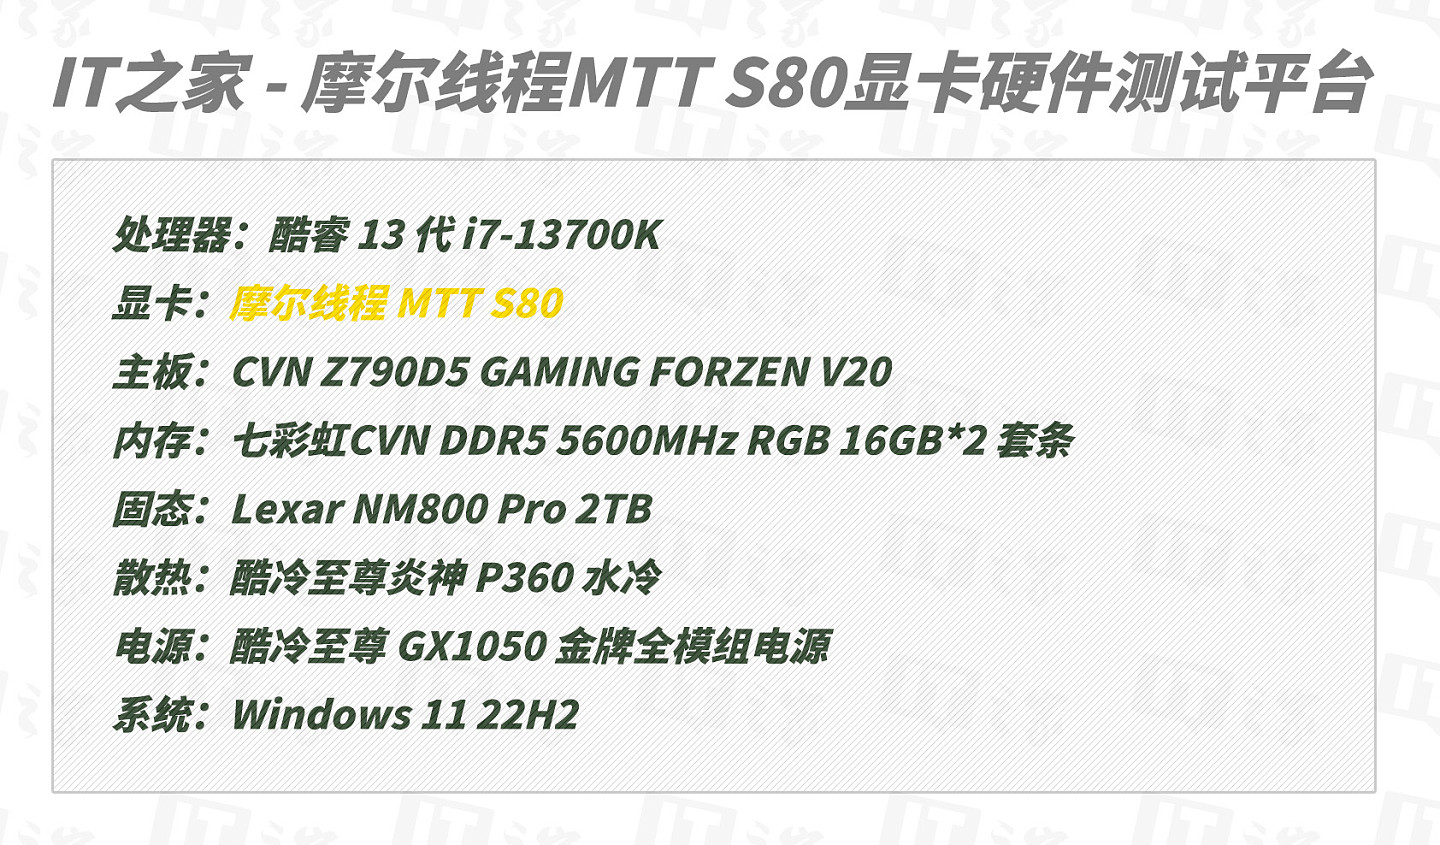 【IT之家评测室】摩尔线程 MTT S80 显卡二测：发售一年玩上 3A，价格引发“瞳孔地震” - 2